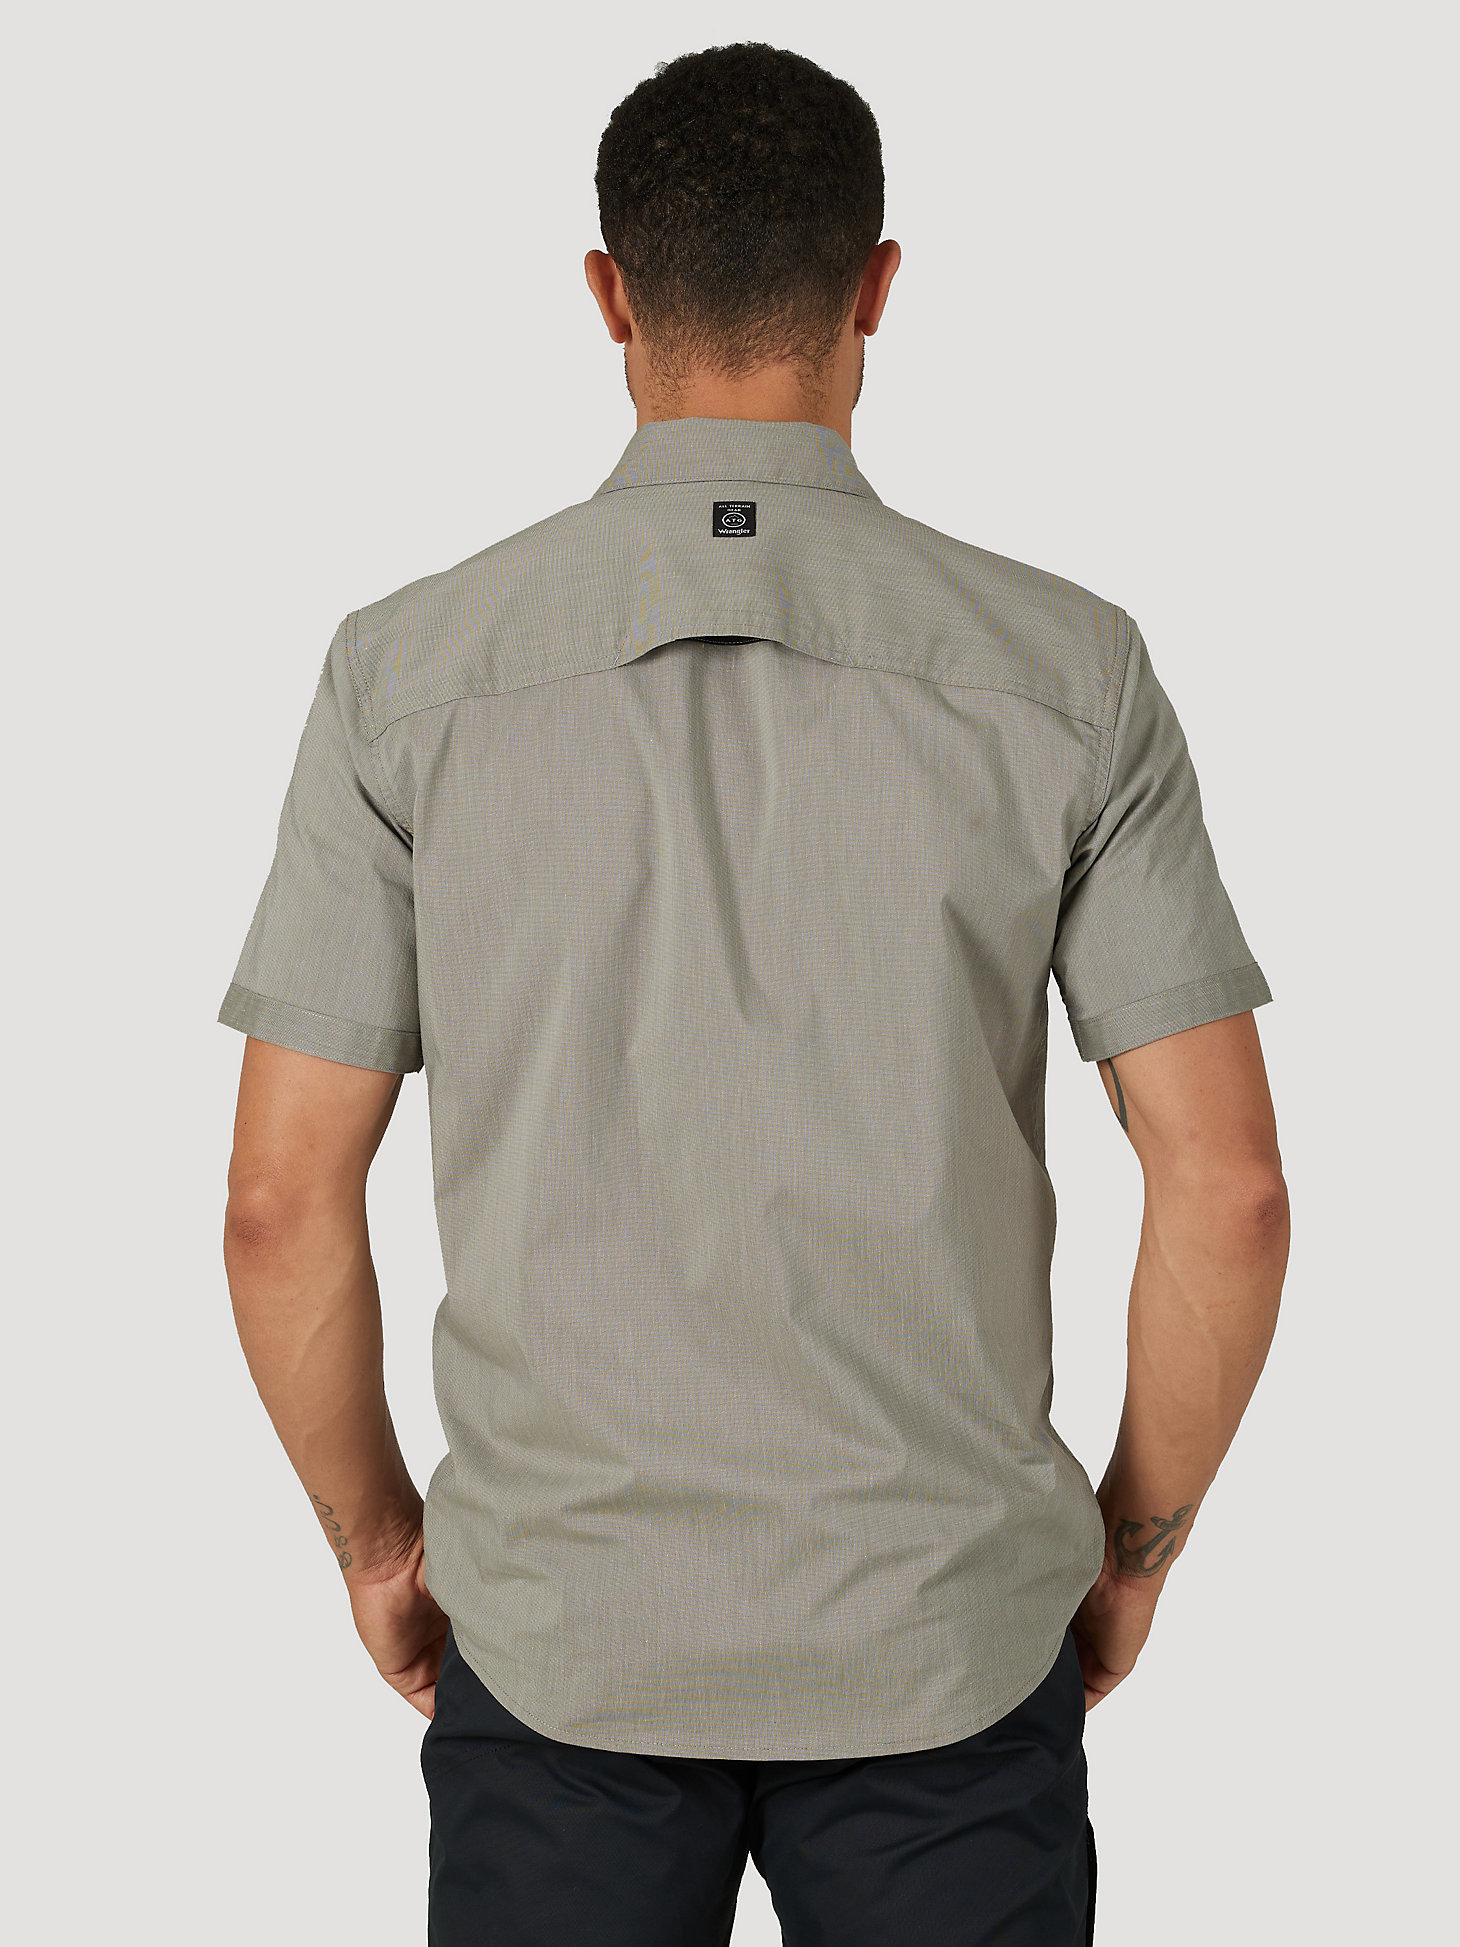 Short Sleeve Zip Pocket Shirt in Dusty Olive alternative view 2